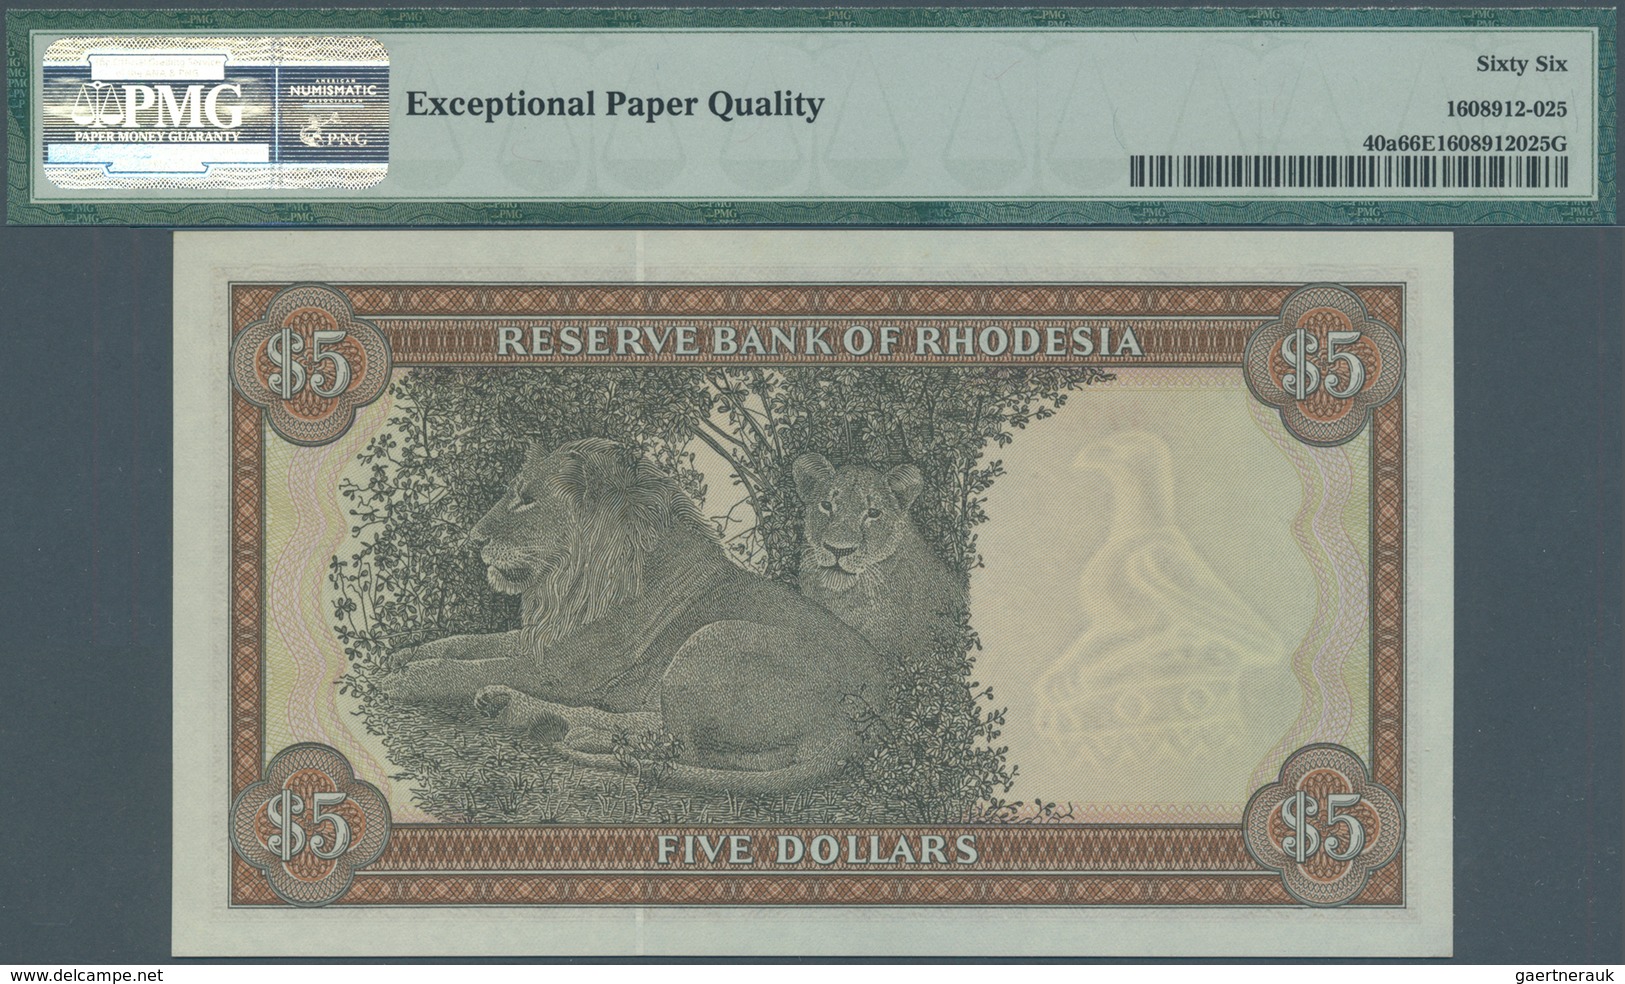 02253 Rhodesia / Rhodesien: Set Of 2 CONSECUTIVE Banknotes 5 Dollars 1979 P. 40a Both PMG Graded, 64 Choic - Rhodesia